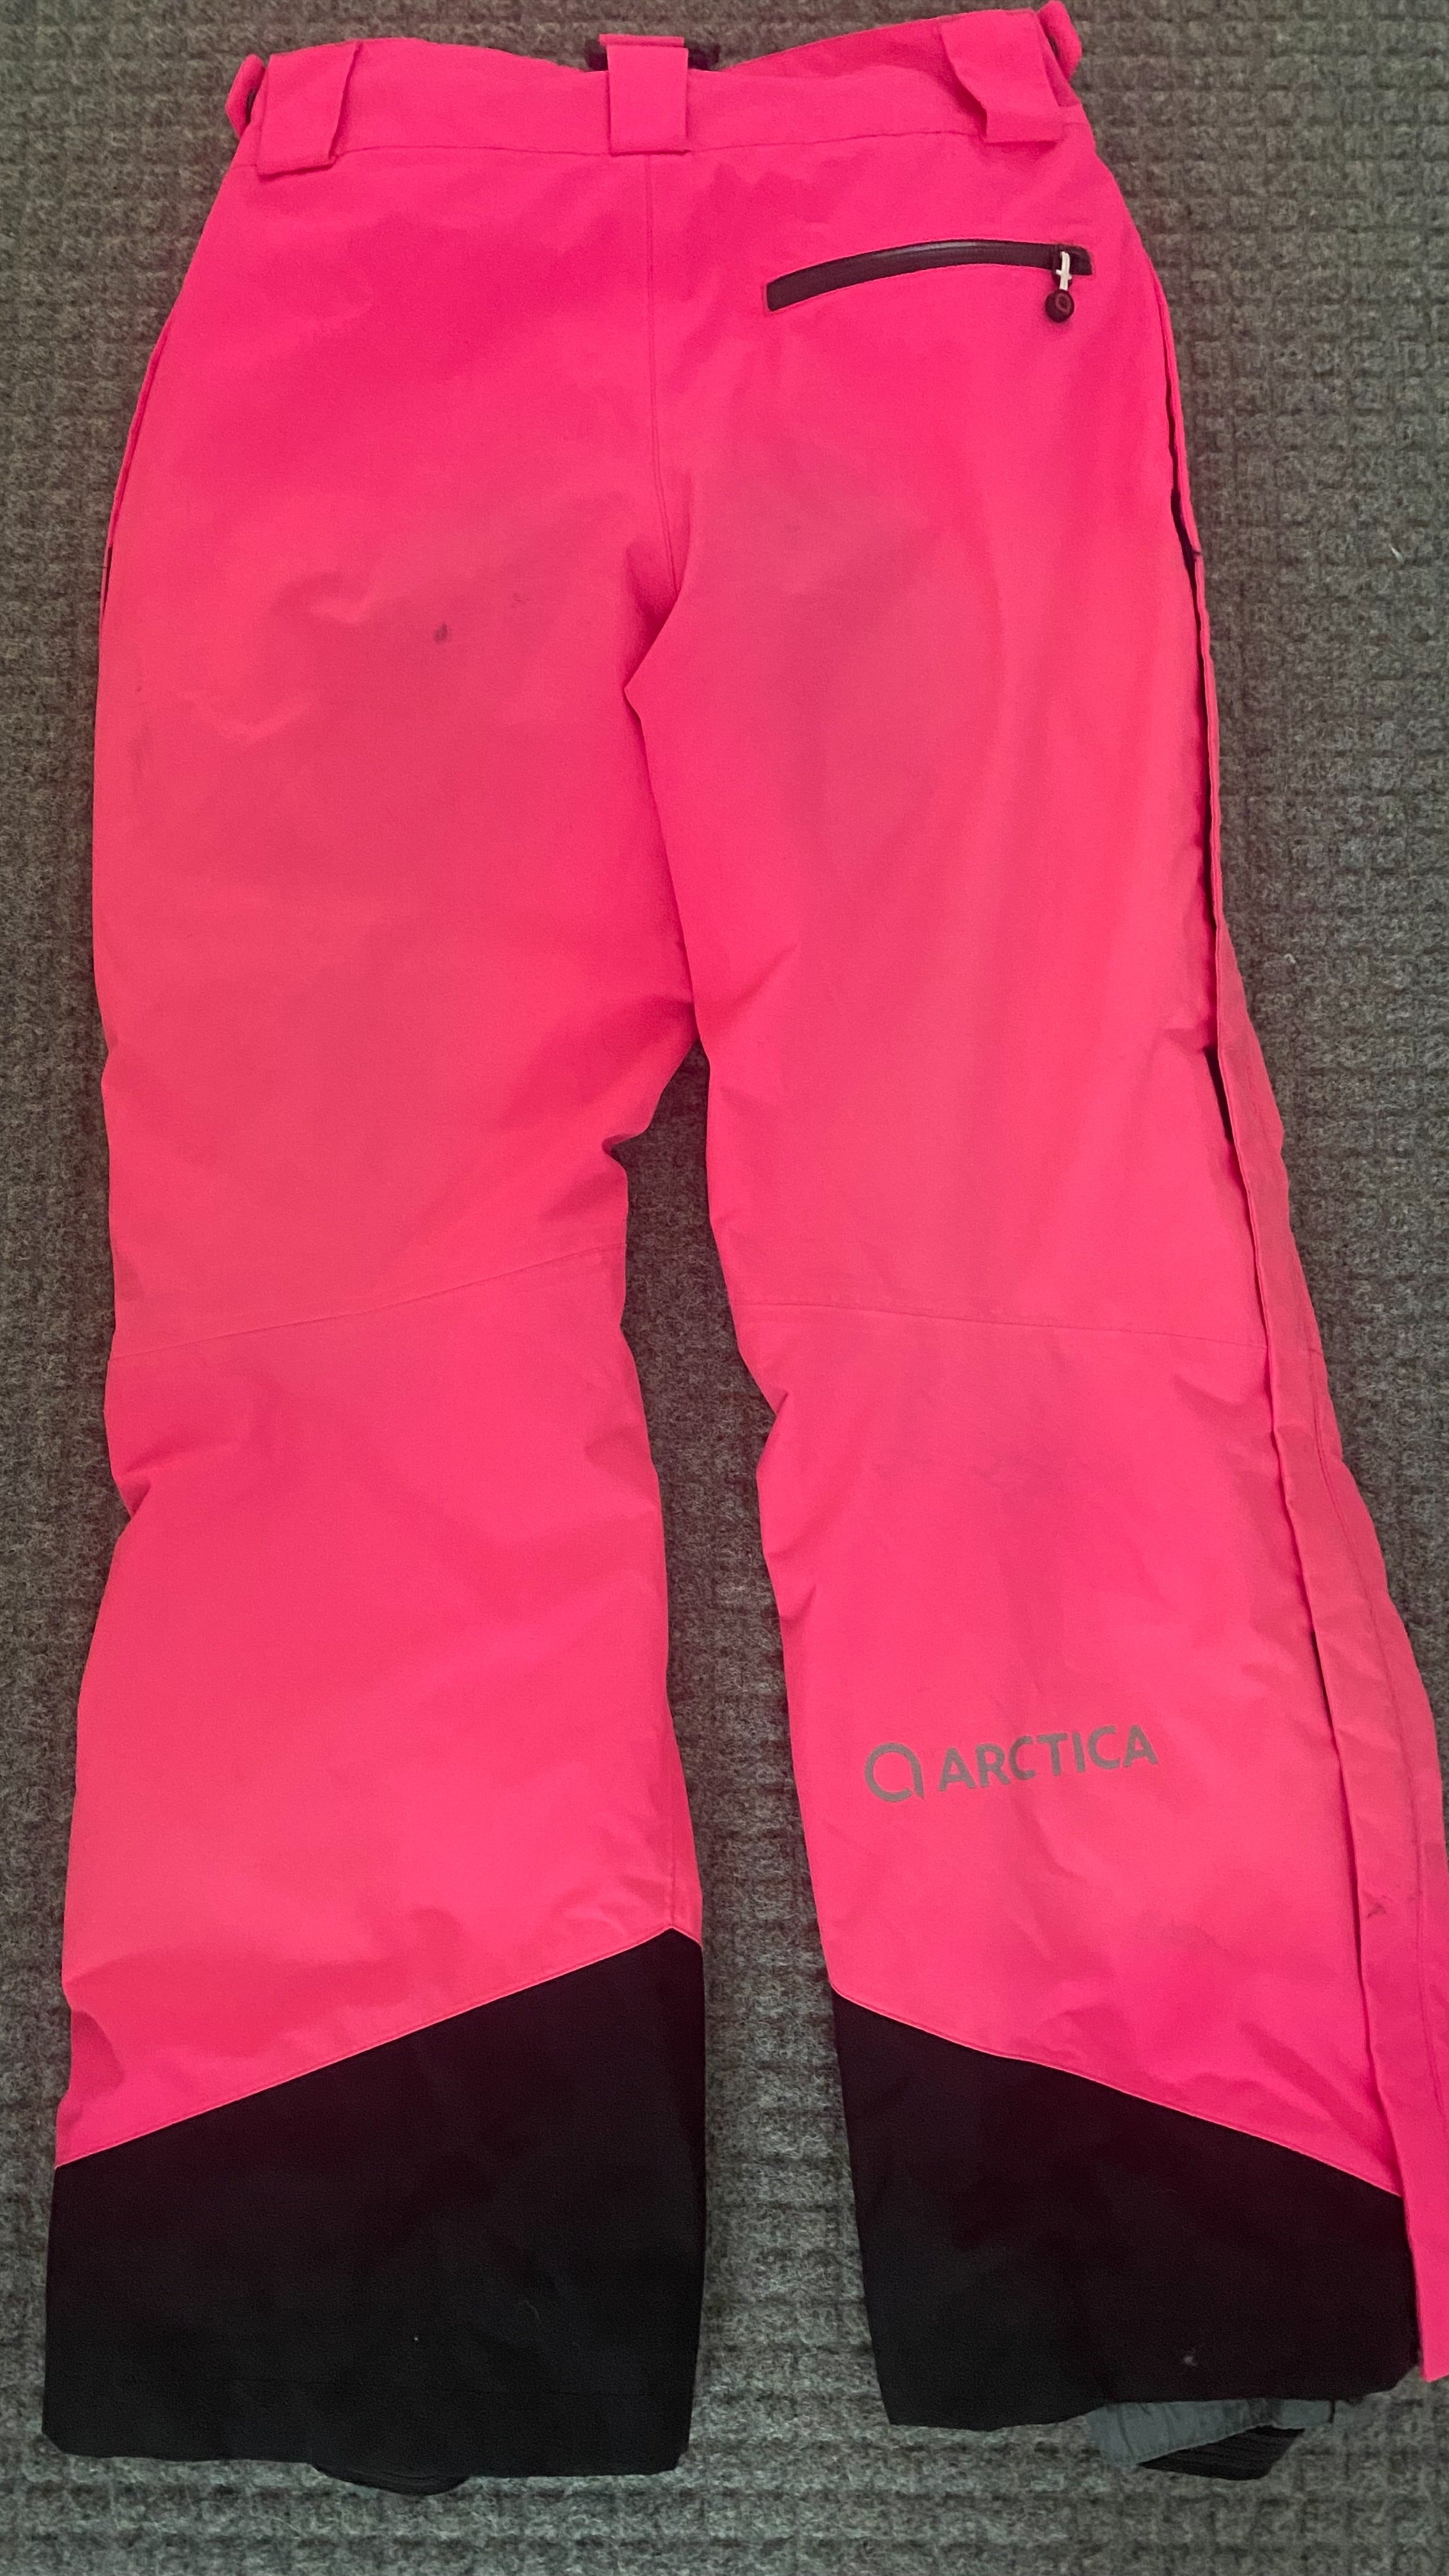 $65 Polarmax Quattro Fleece Women's Pants Baselayer Bottoms Tights